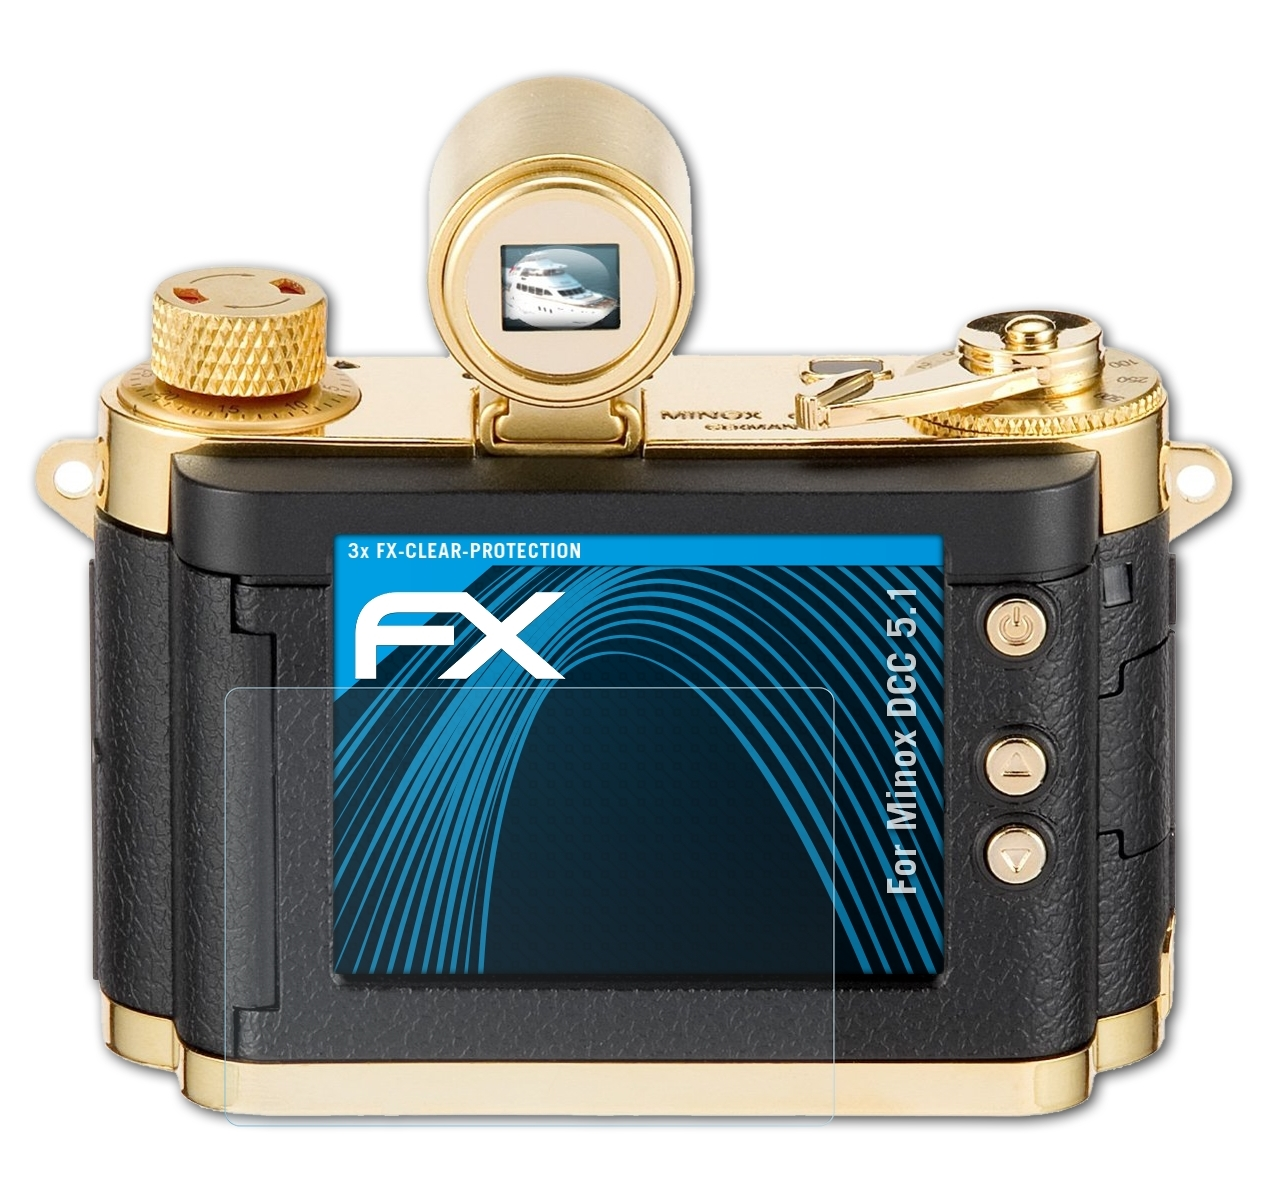 ATFOLIX 3x FX-Clear Minox Displayschutz(für DCC 5.1)